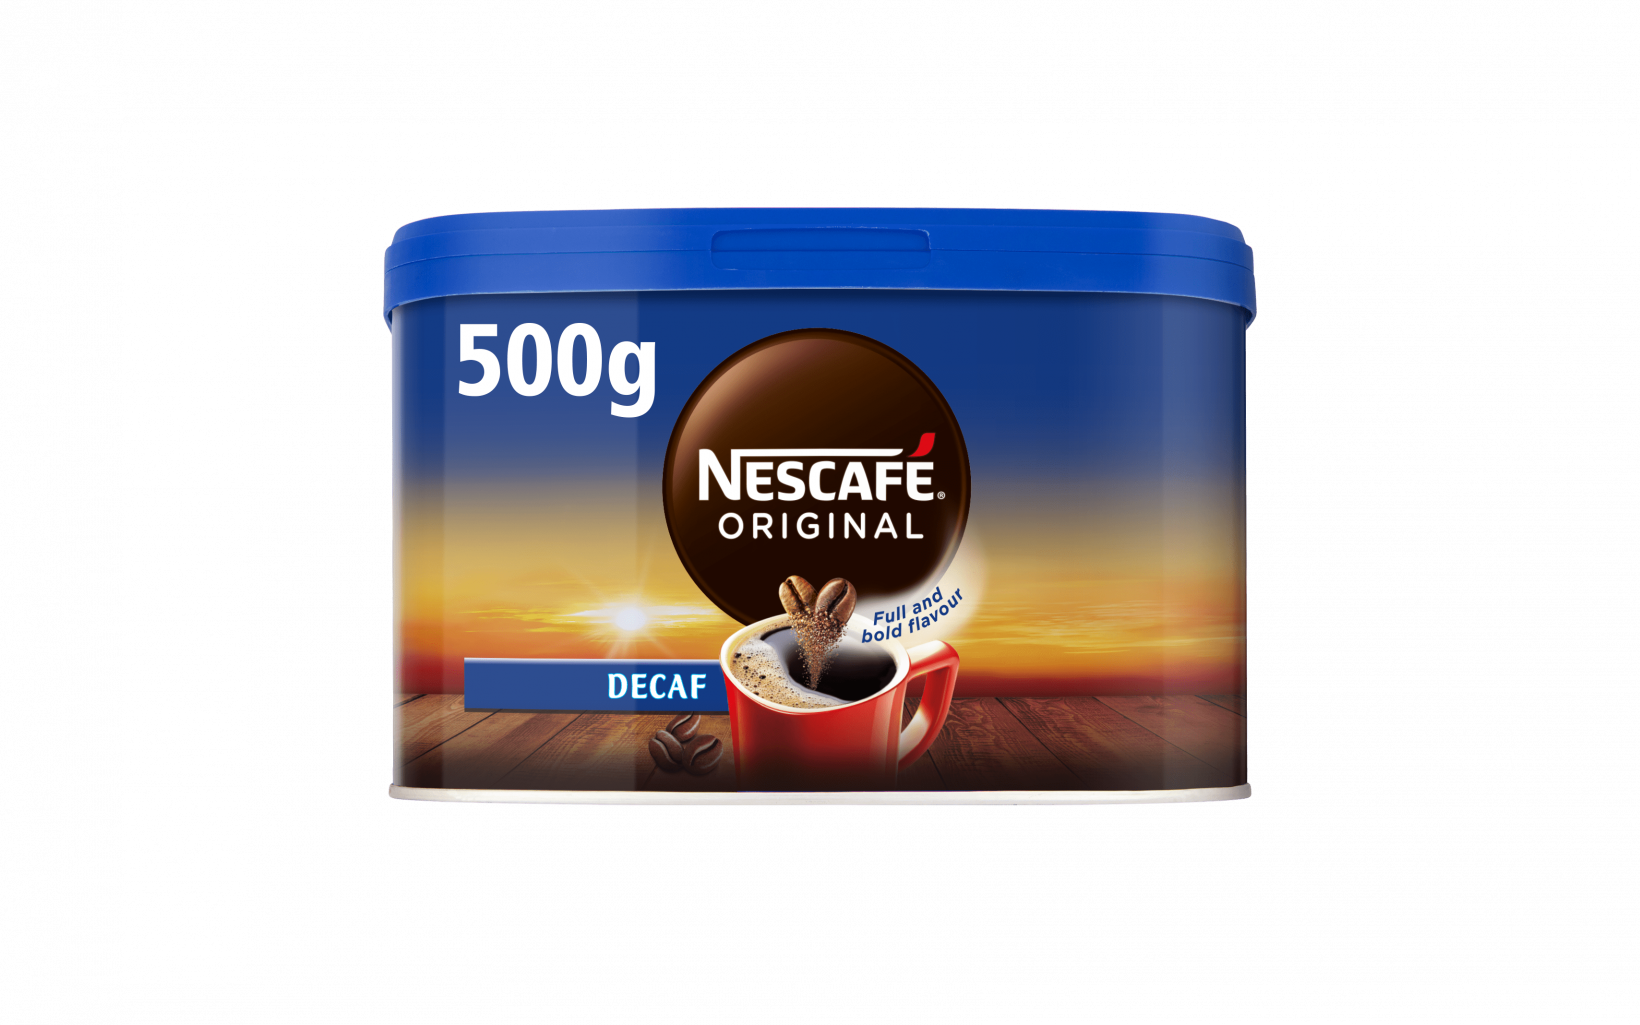 5865 Nescafe Original Decaff 500g Cgi Front Mhi